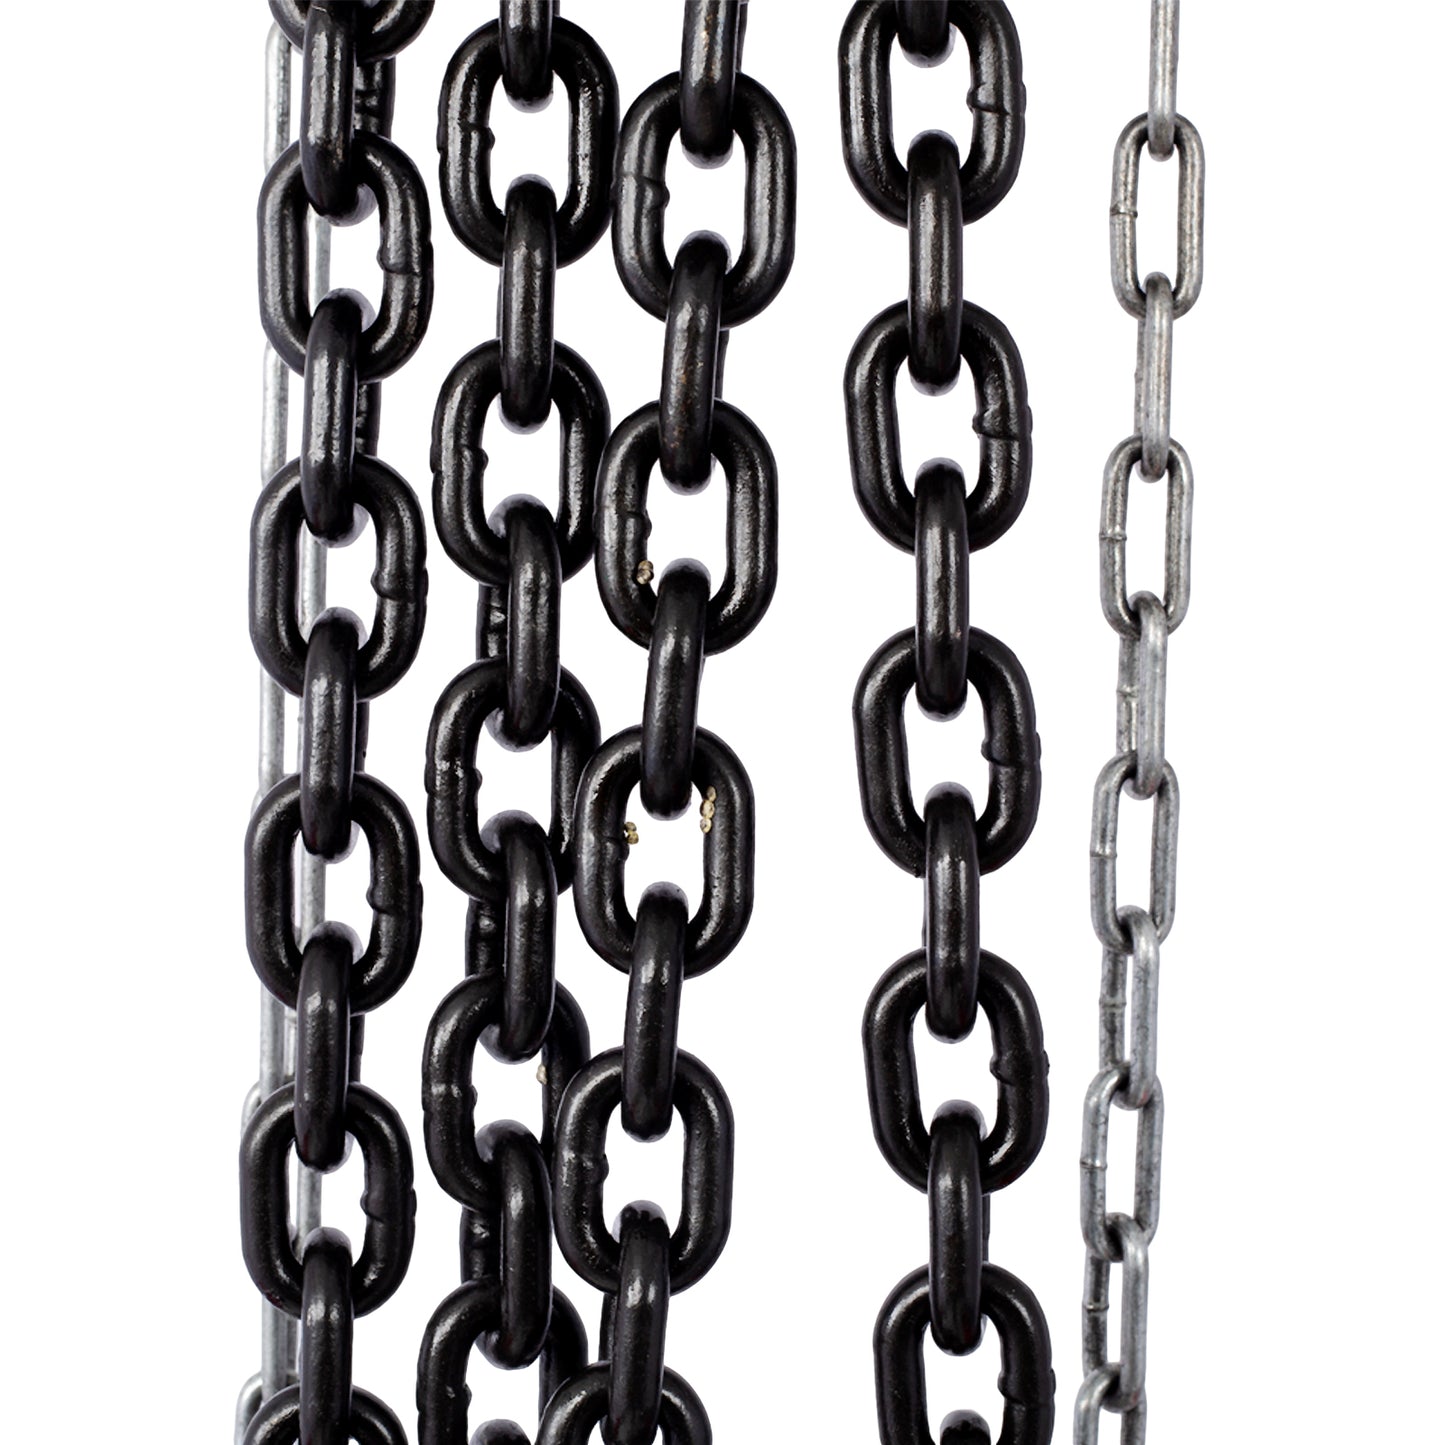 Chain hoist 11000lbs 5T capacity 10ft wIth 2 heavy duty hooks,Manual chain hoist steel construction,Yellow